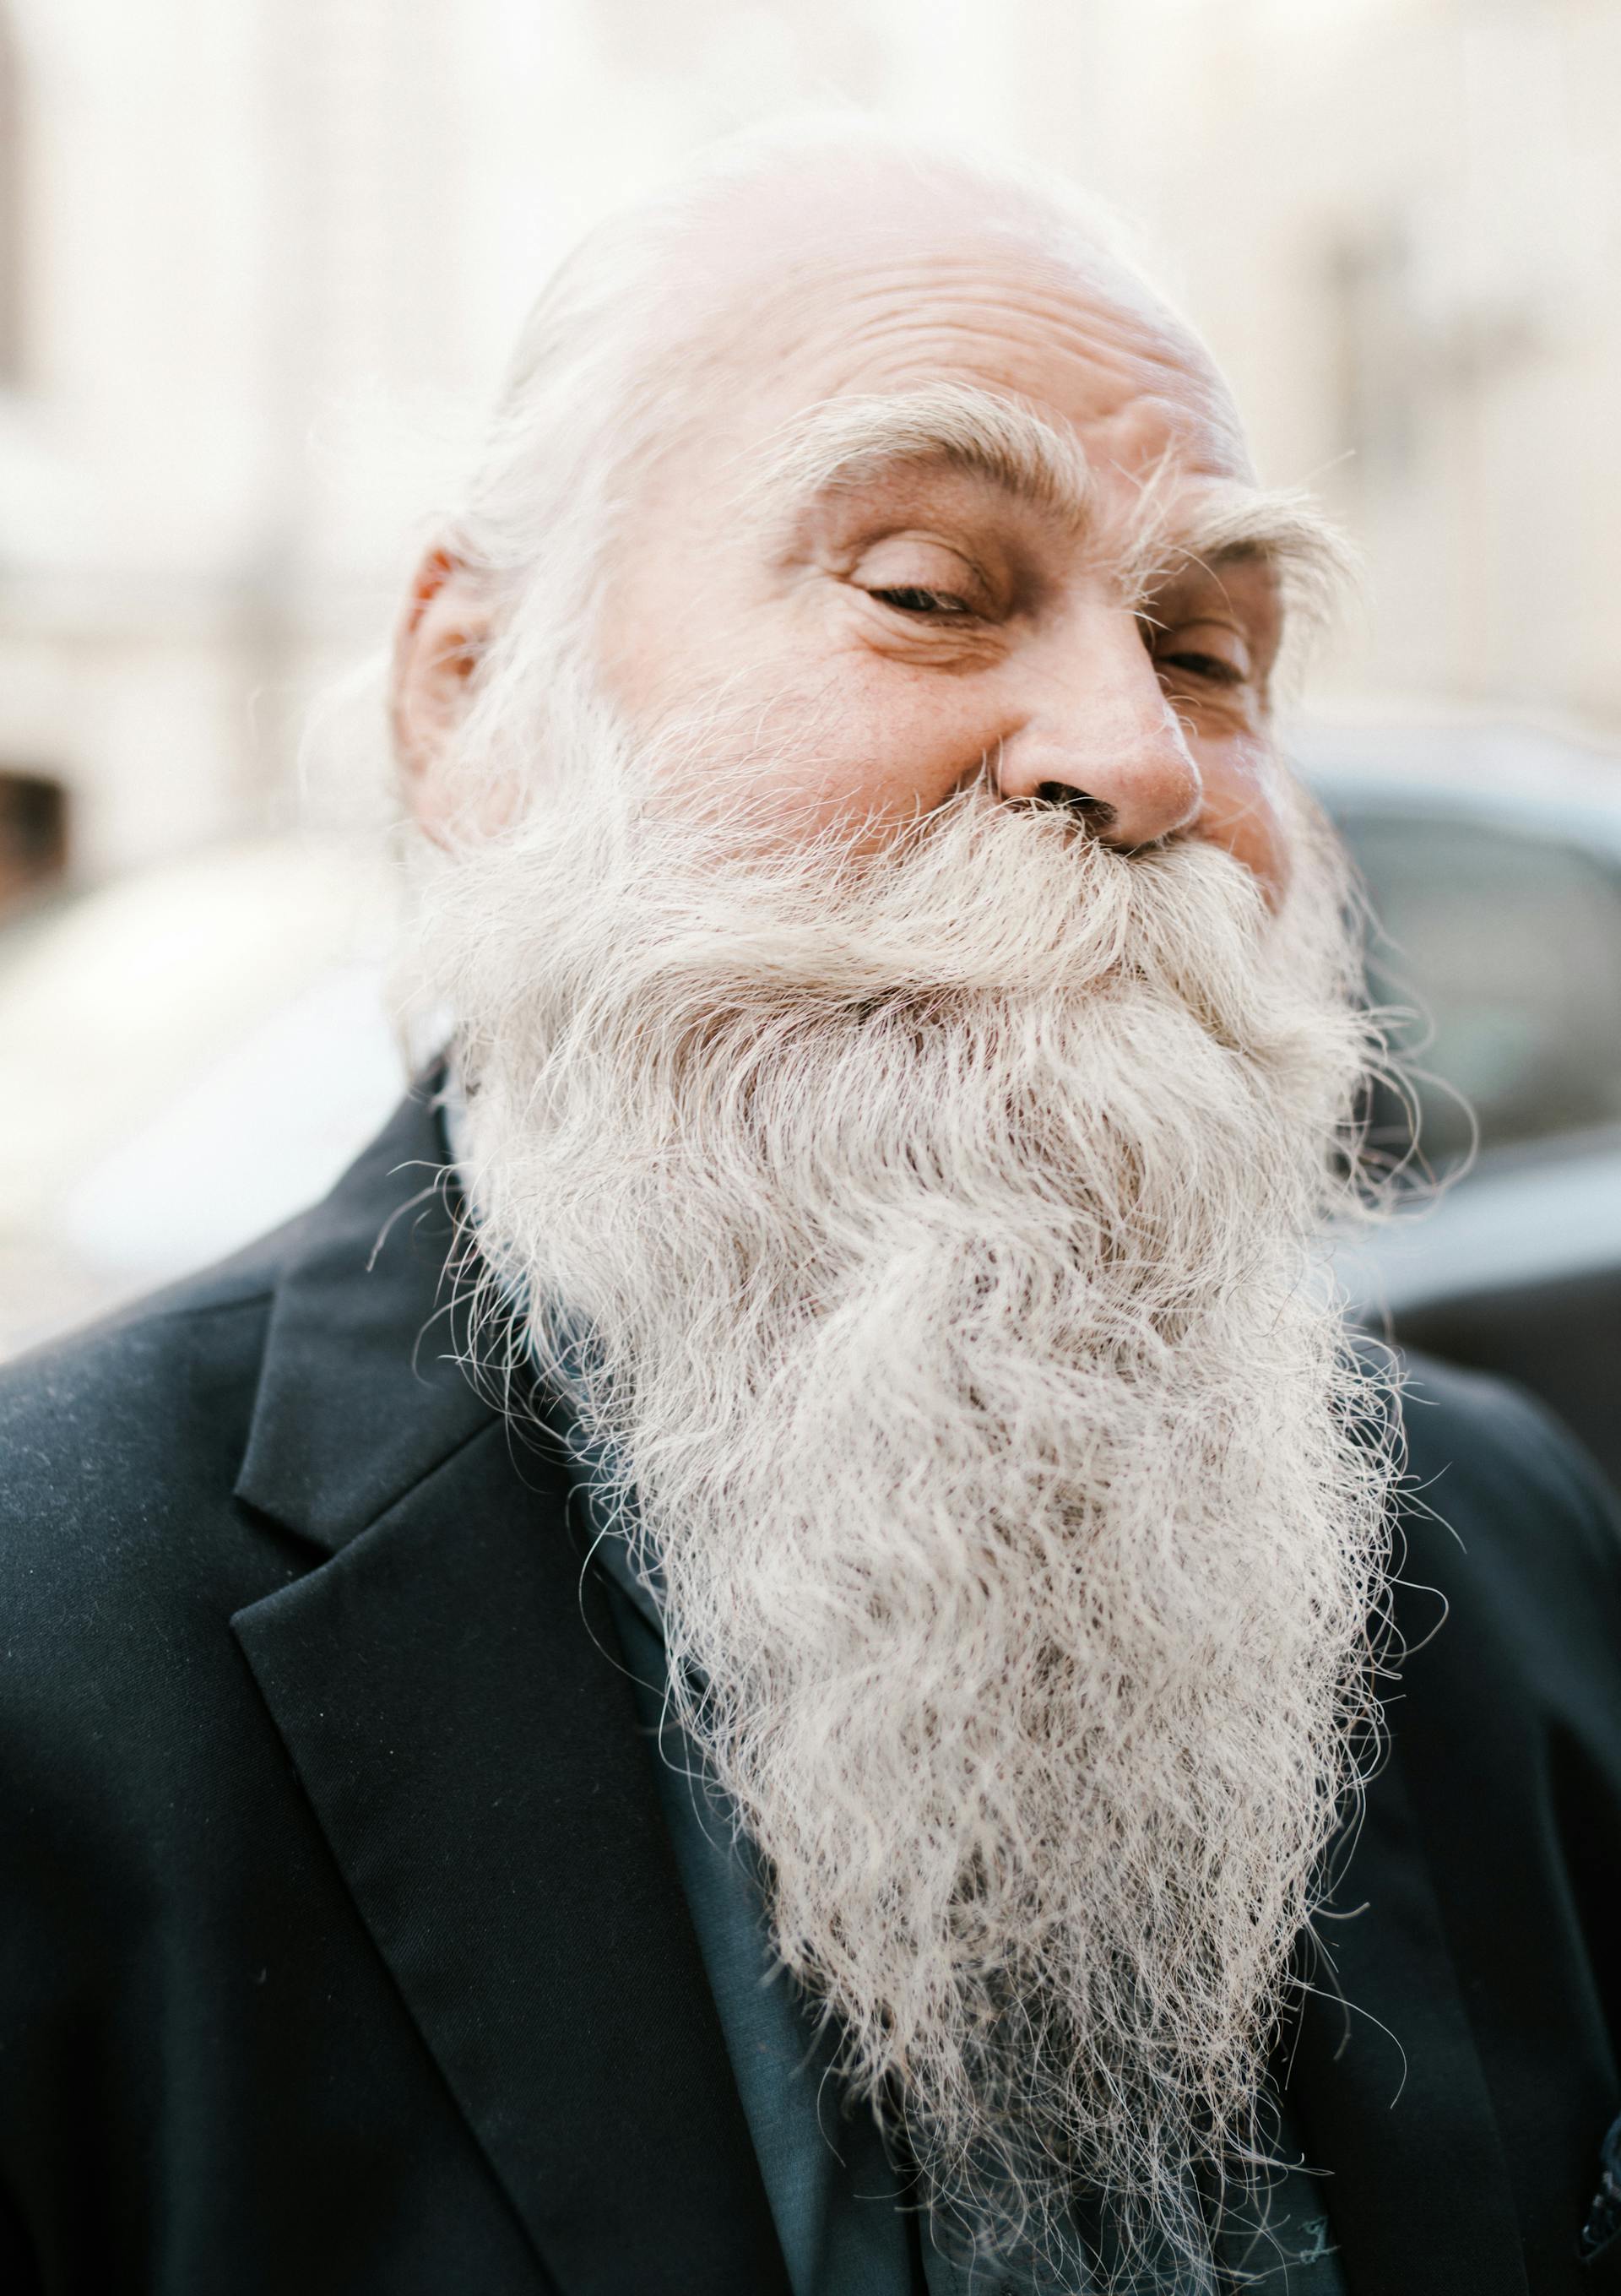 An older man smiling | Source: Pexels